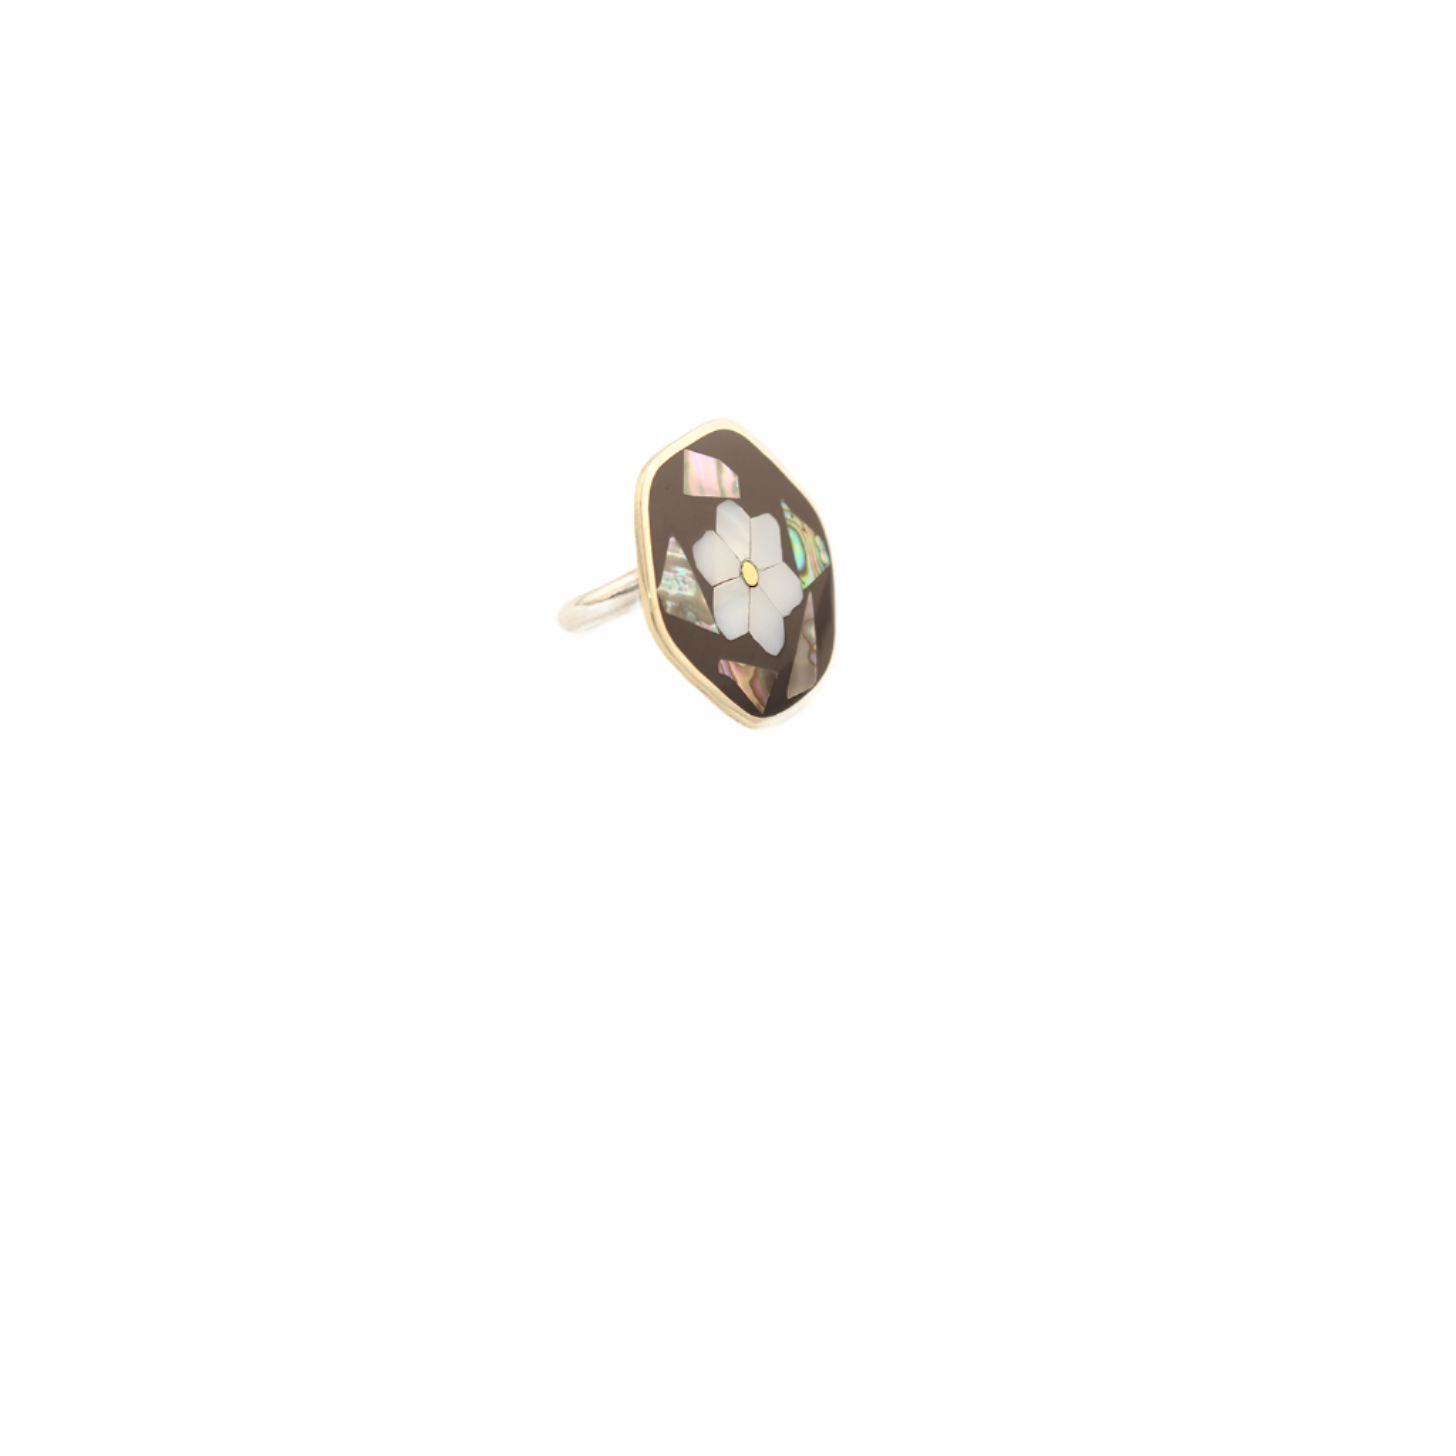 Ocean's Whisper - Verstellbarer Ring aus Abalone-Perlmutt - Sechseckige Blume - Schwarz - 1,25 Zoll. x 1,25 Zoll.